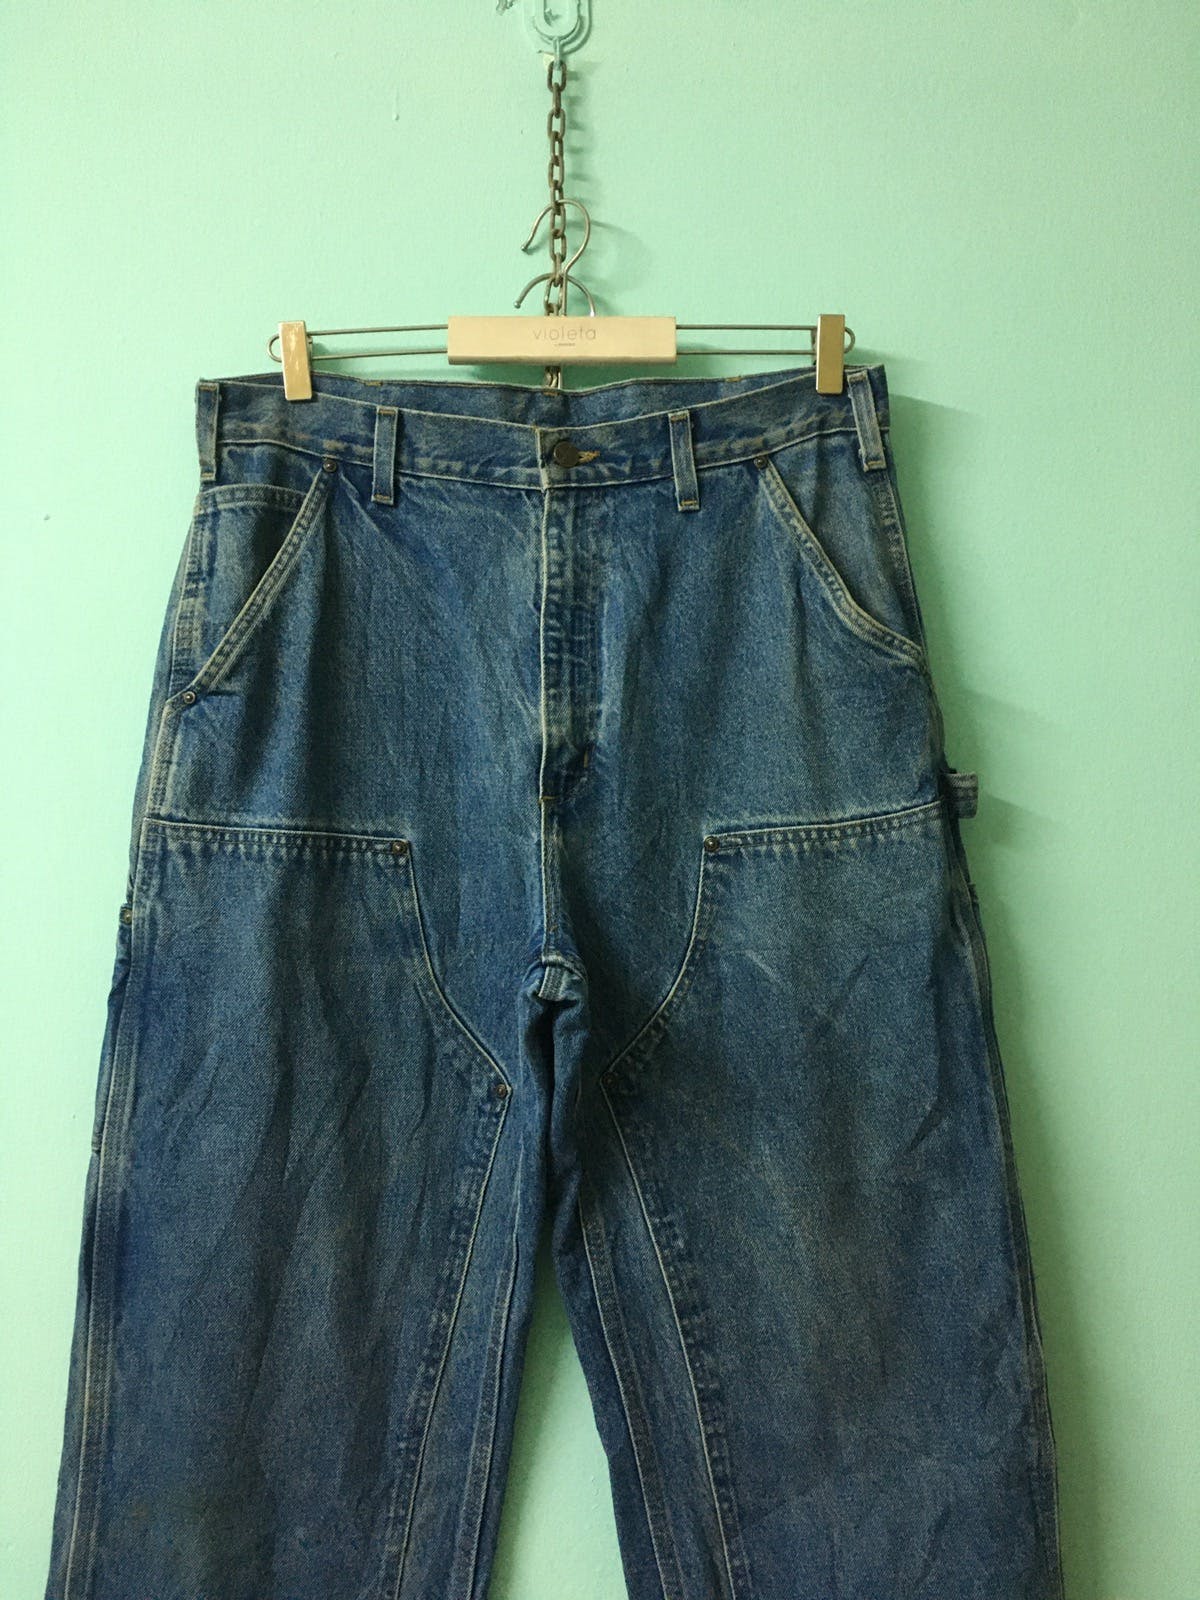 Carharrt double knee jeans - 3